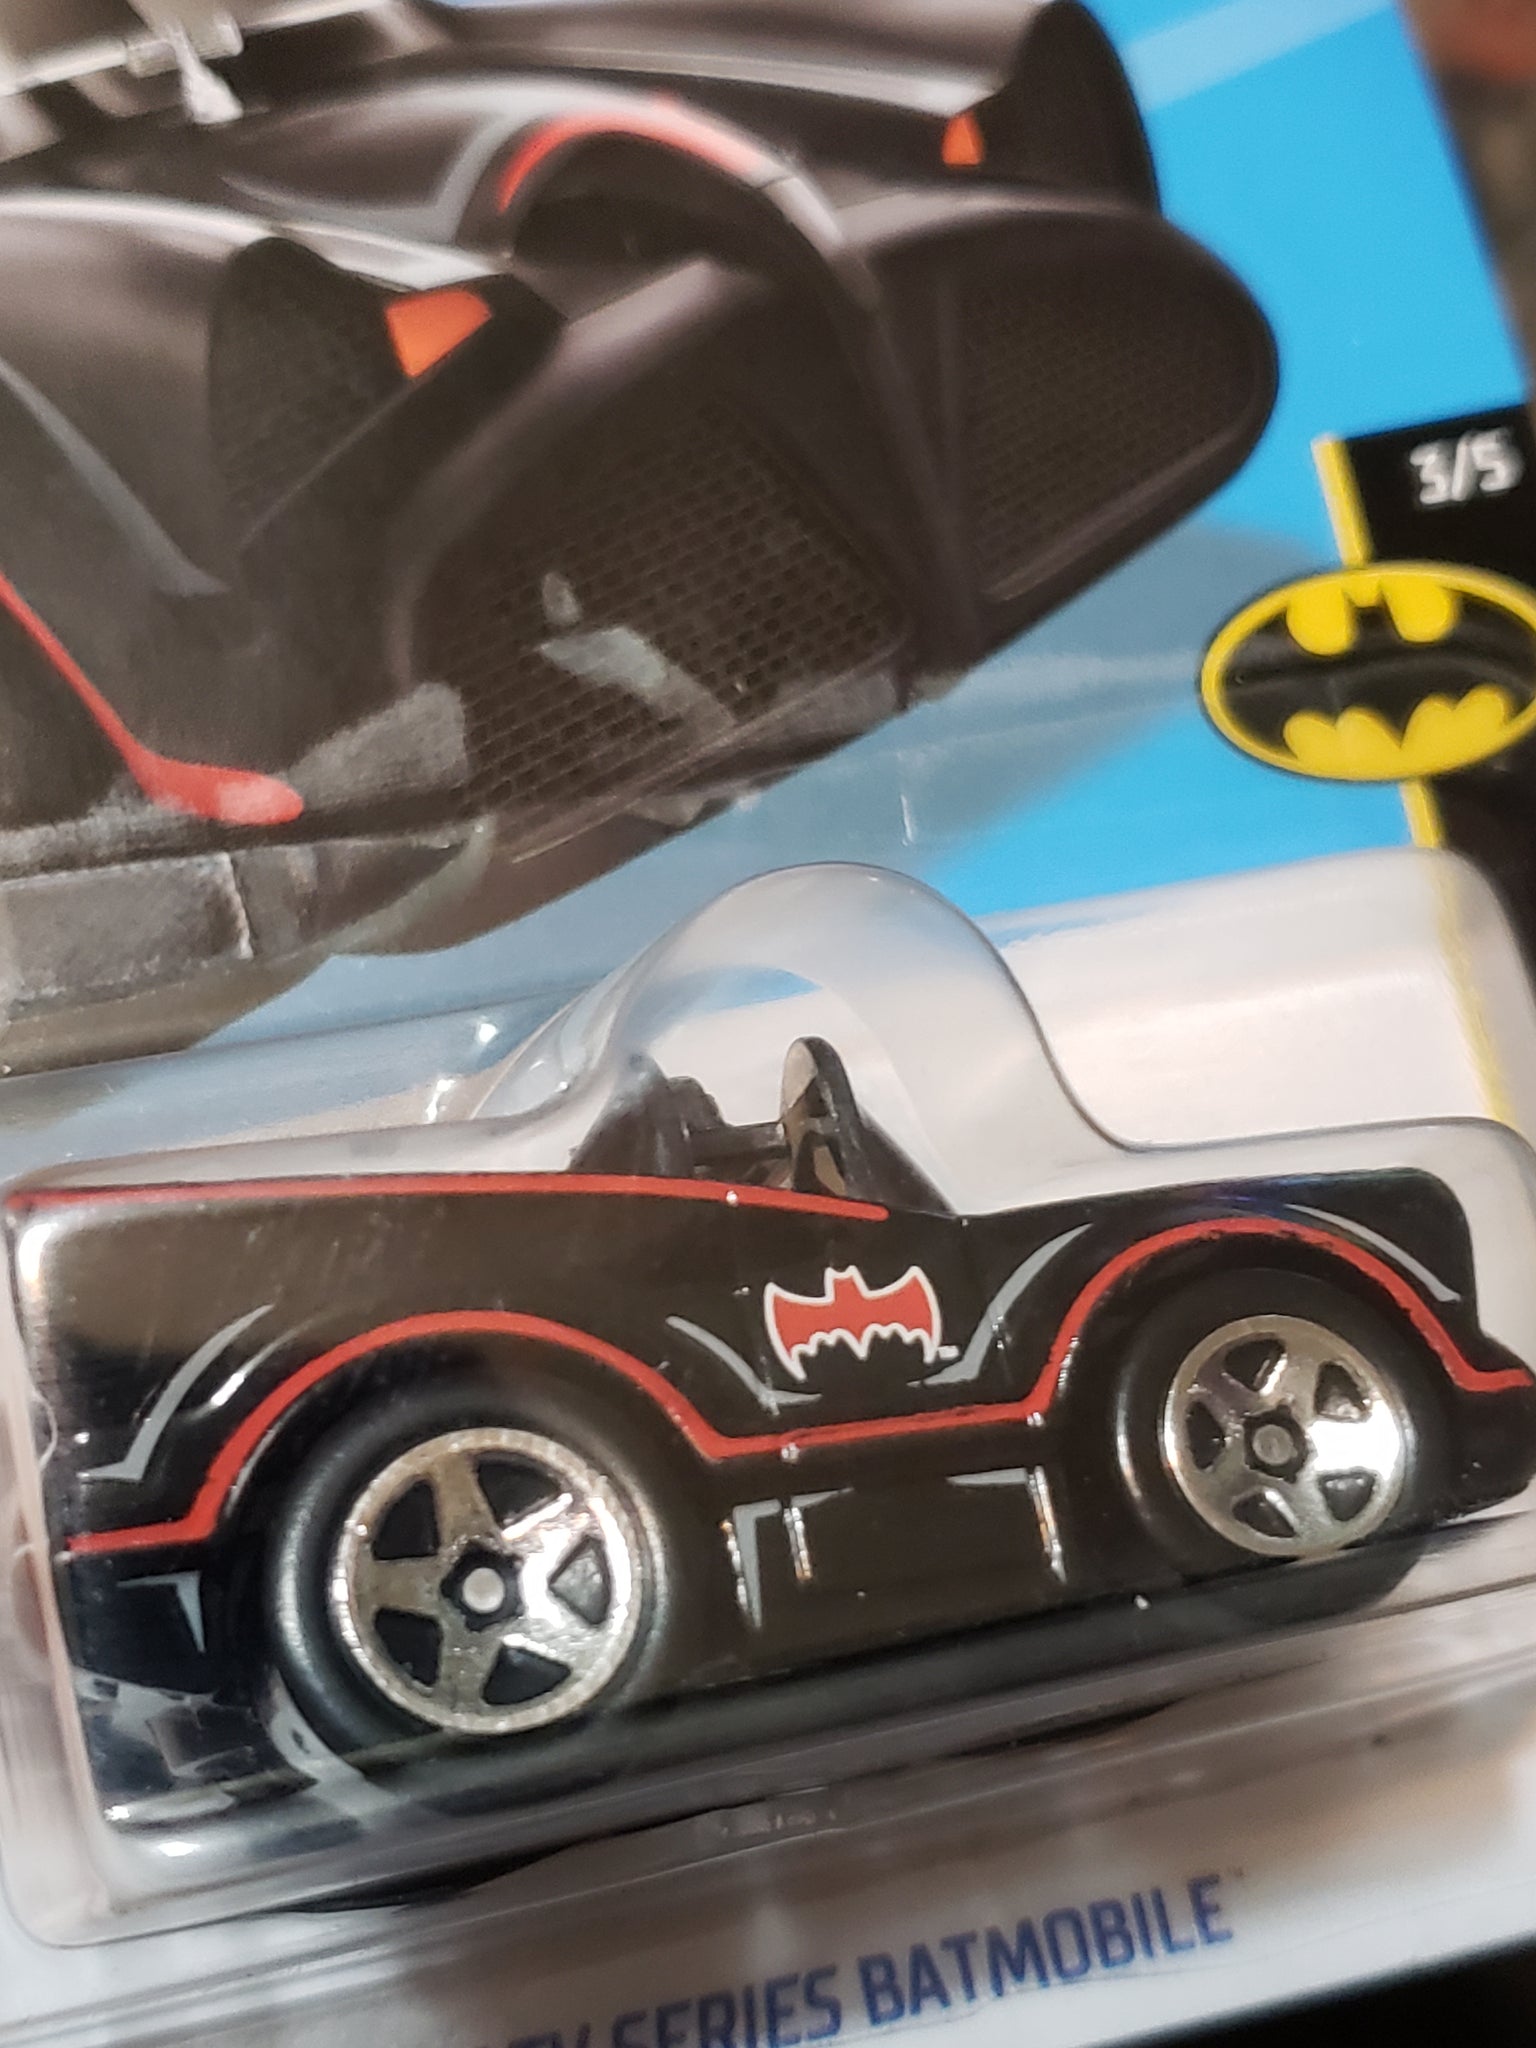 Hot wheels Batman Series TV Series Batmobile